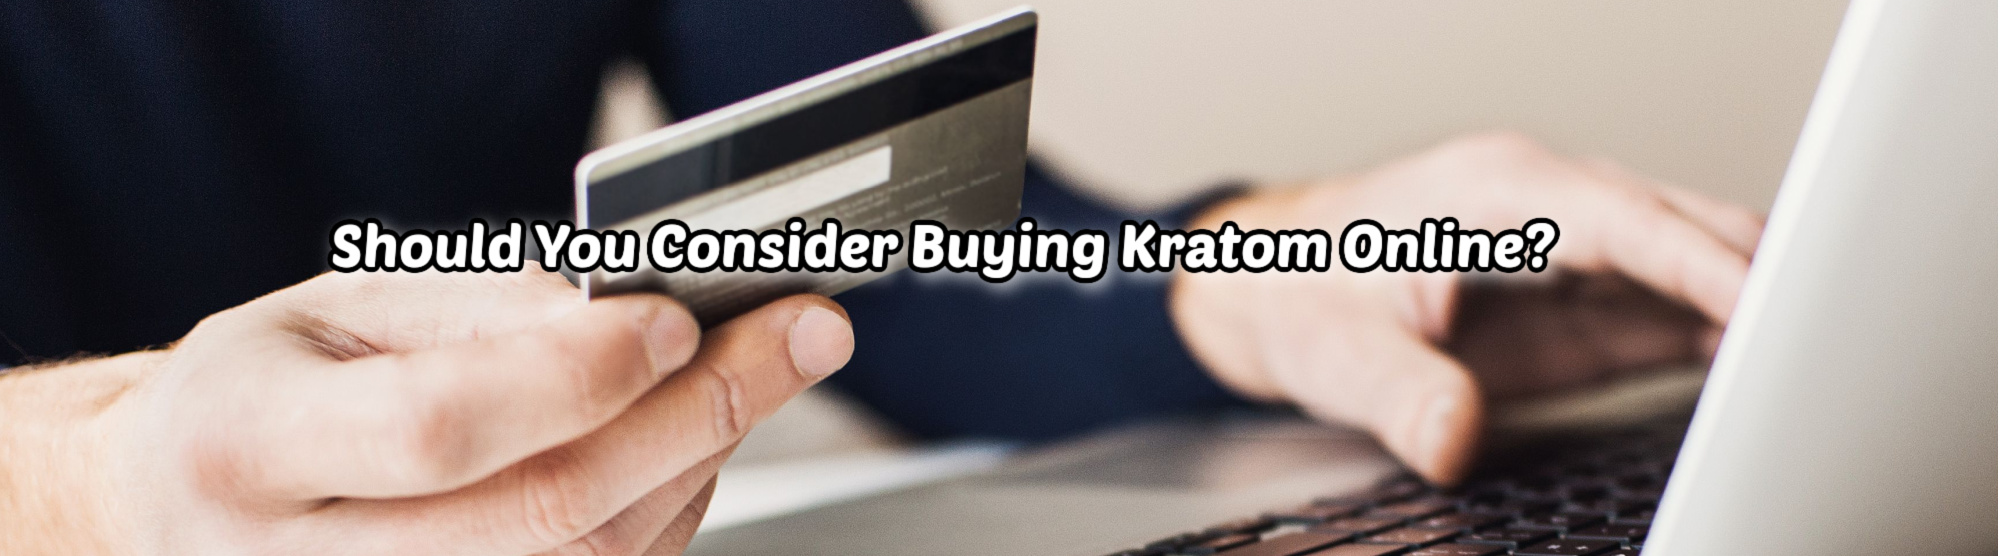 image of should you consider buying kratom online